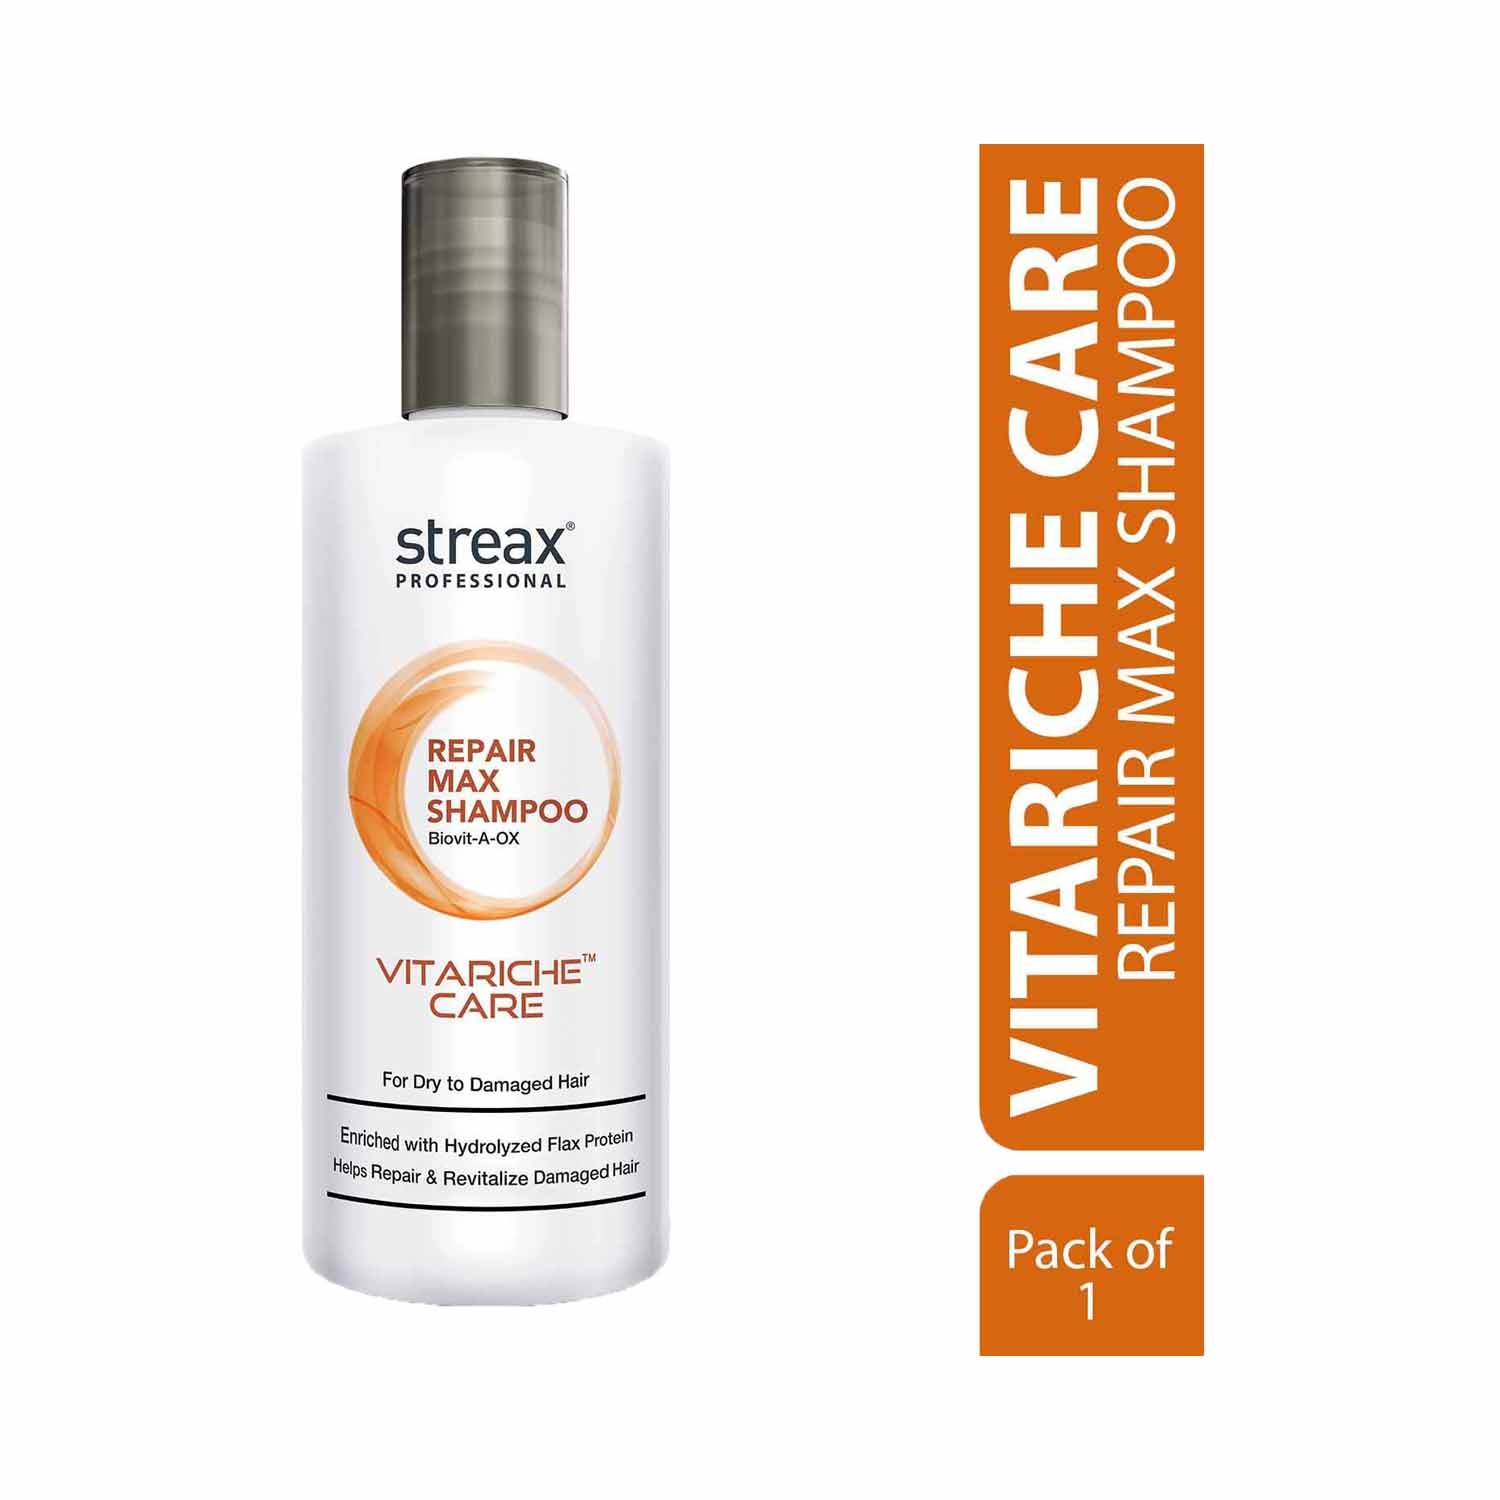 Streax Professional | Streax Professional Vitarich Care Repair Max Shampoo (300ml)